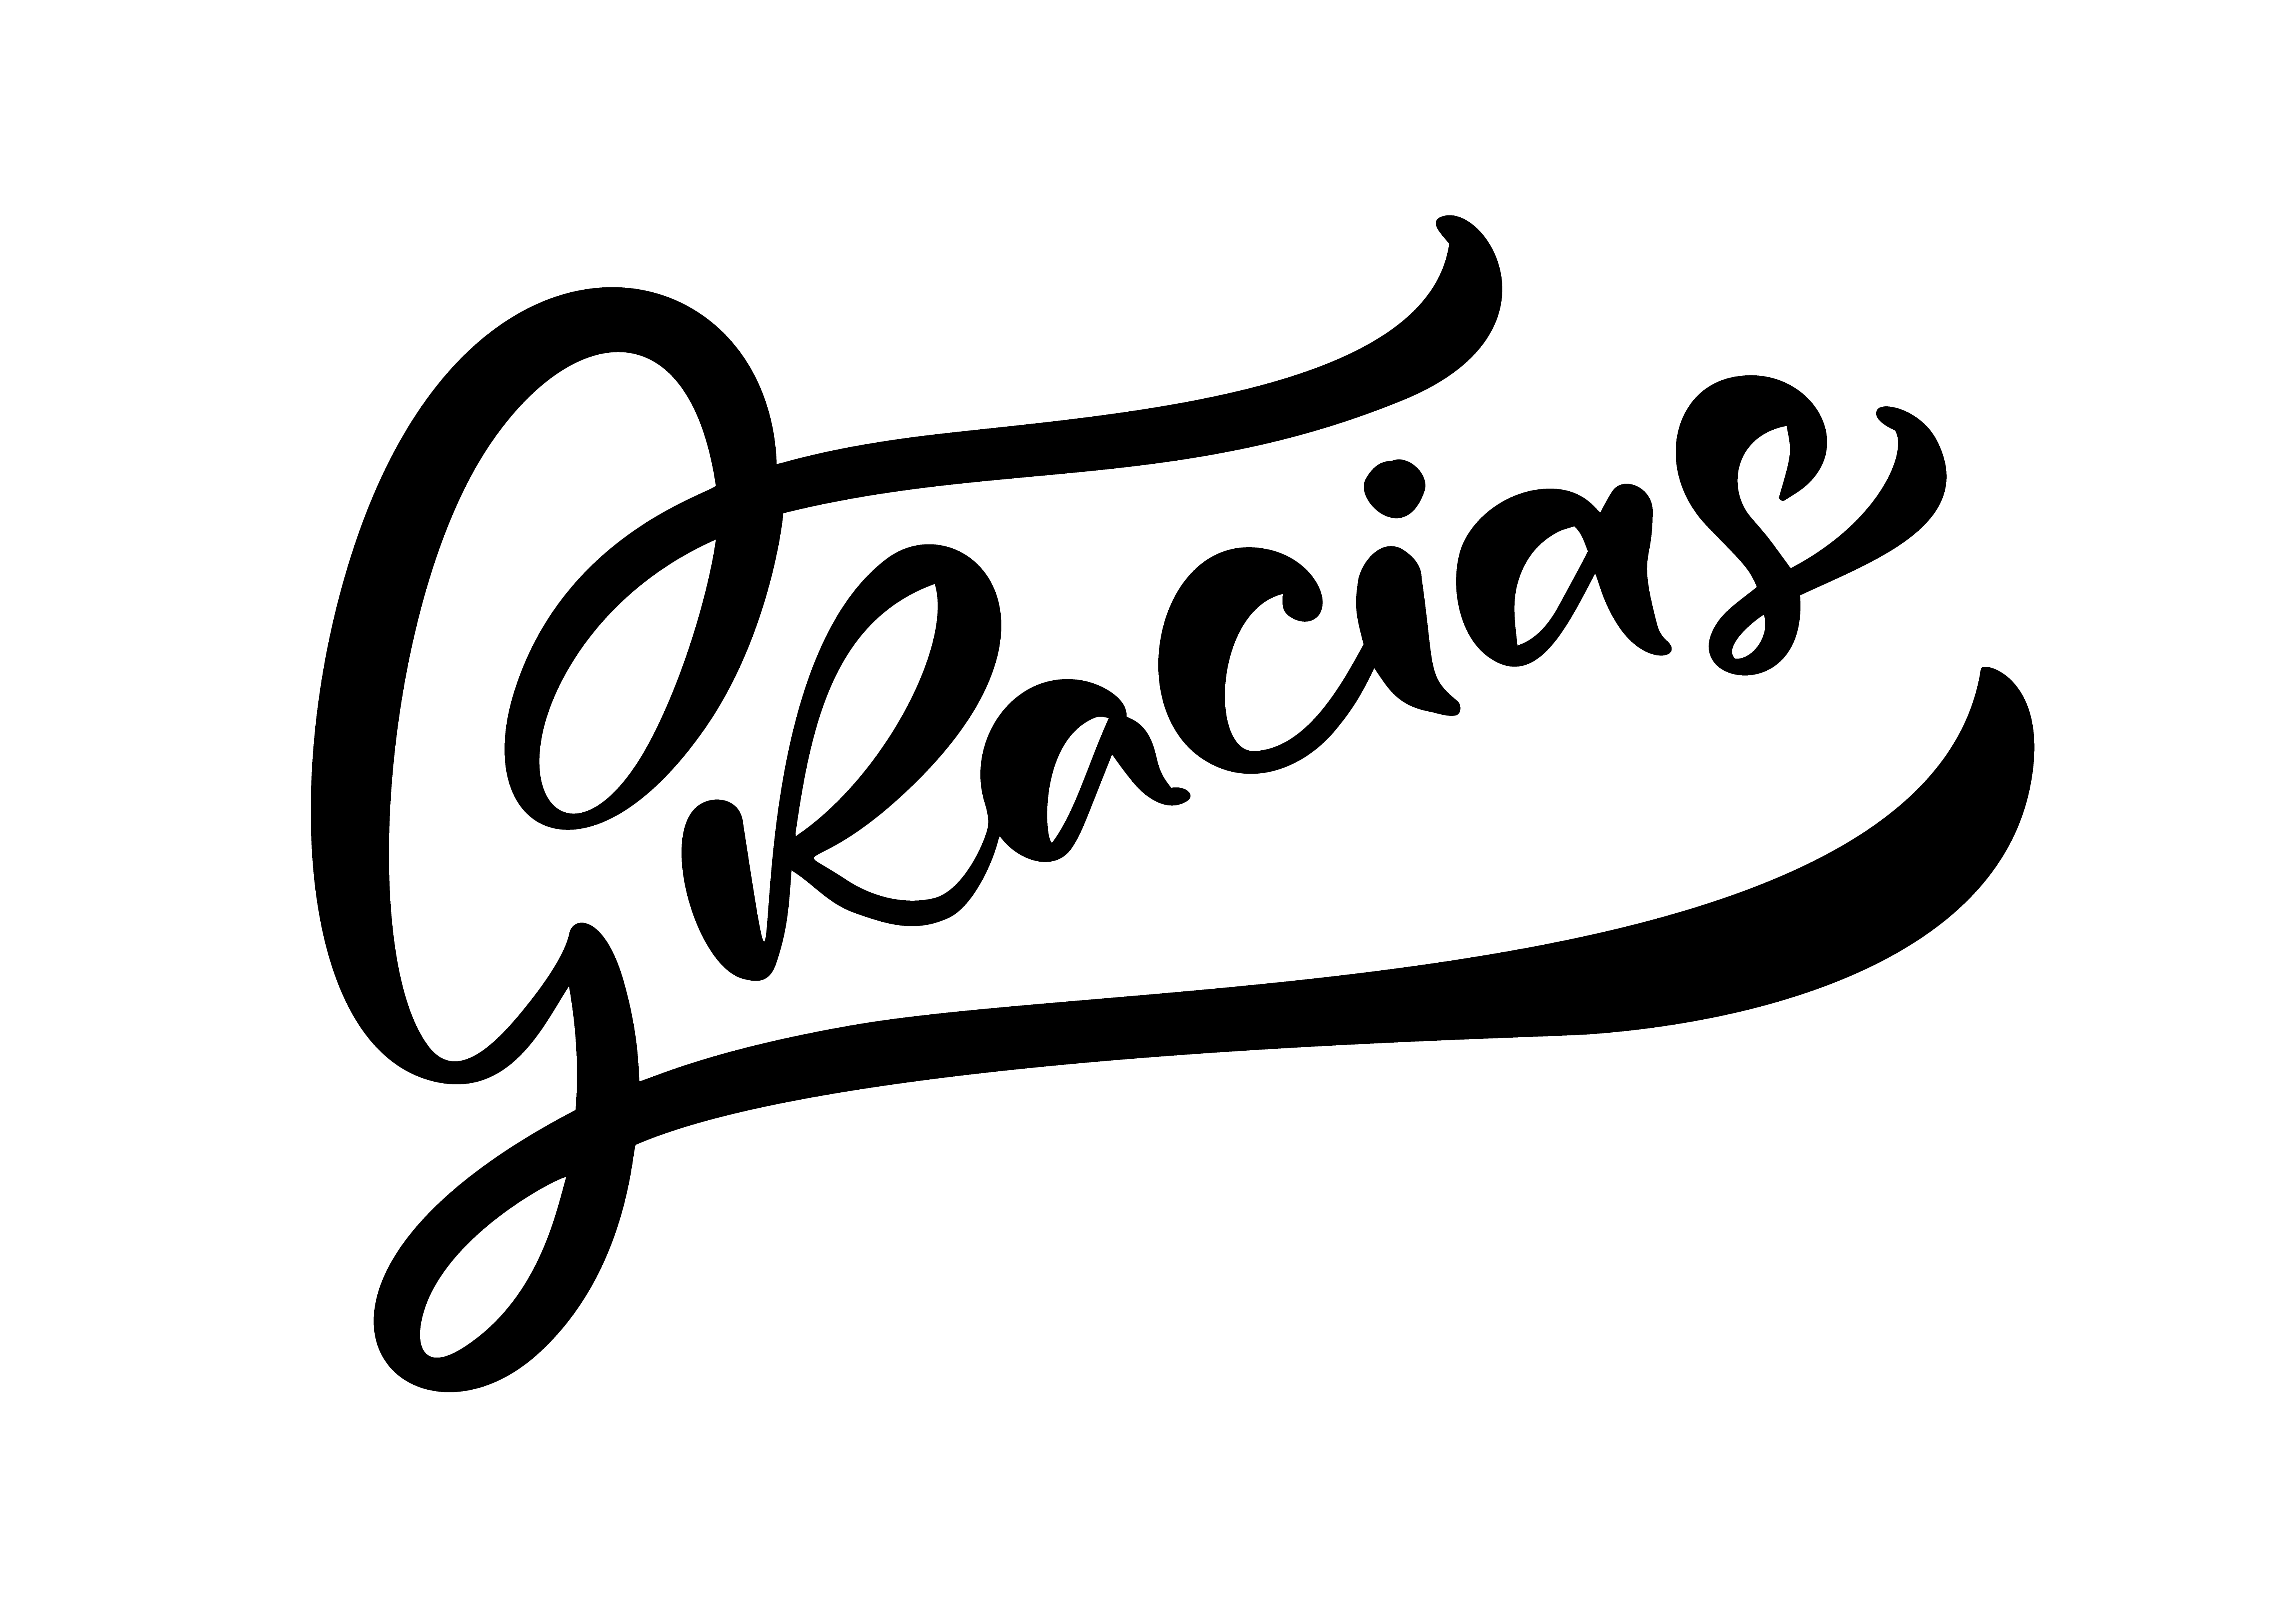 "Gracias" ("Thank you" in Spanish) Modern brush calligraphy 375977